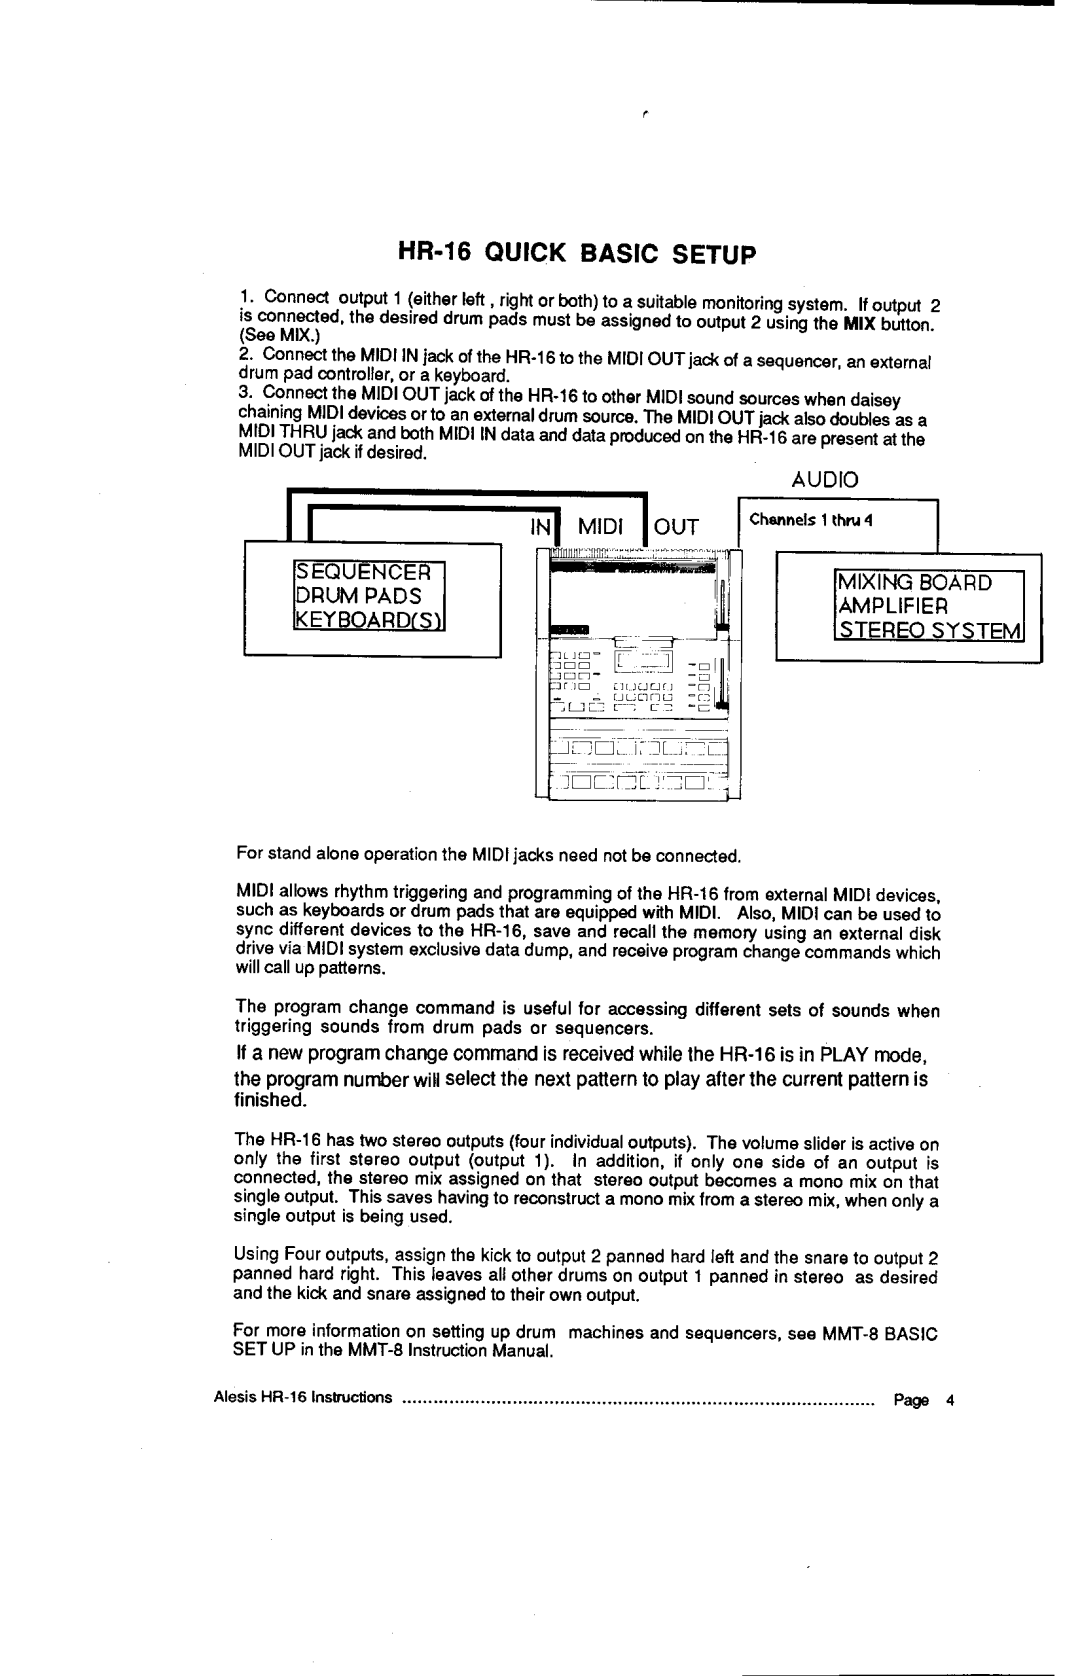 Alesis MMT-8, HR-16:B instruction manual HR.16QUICKBASICSETUP 